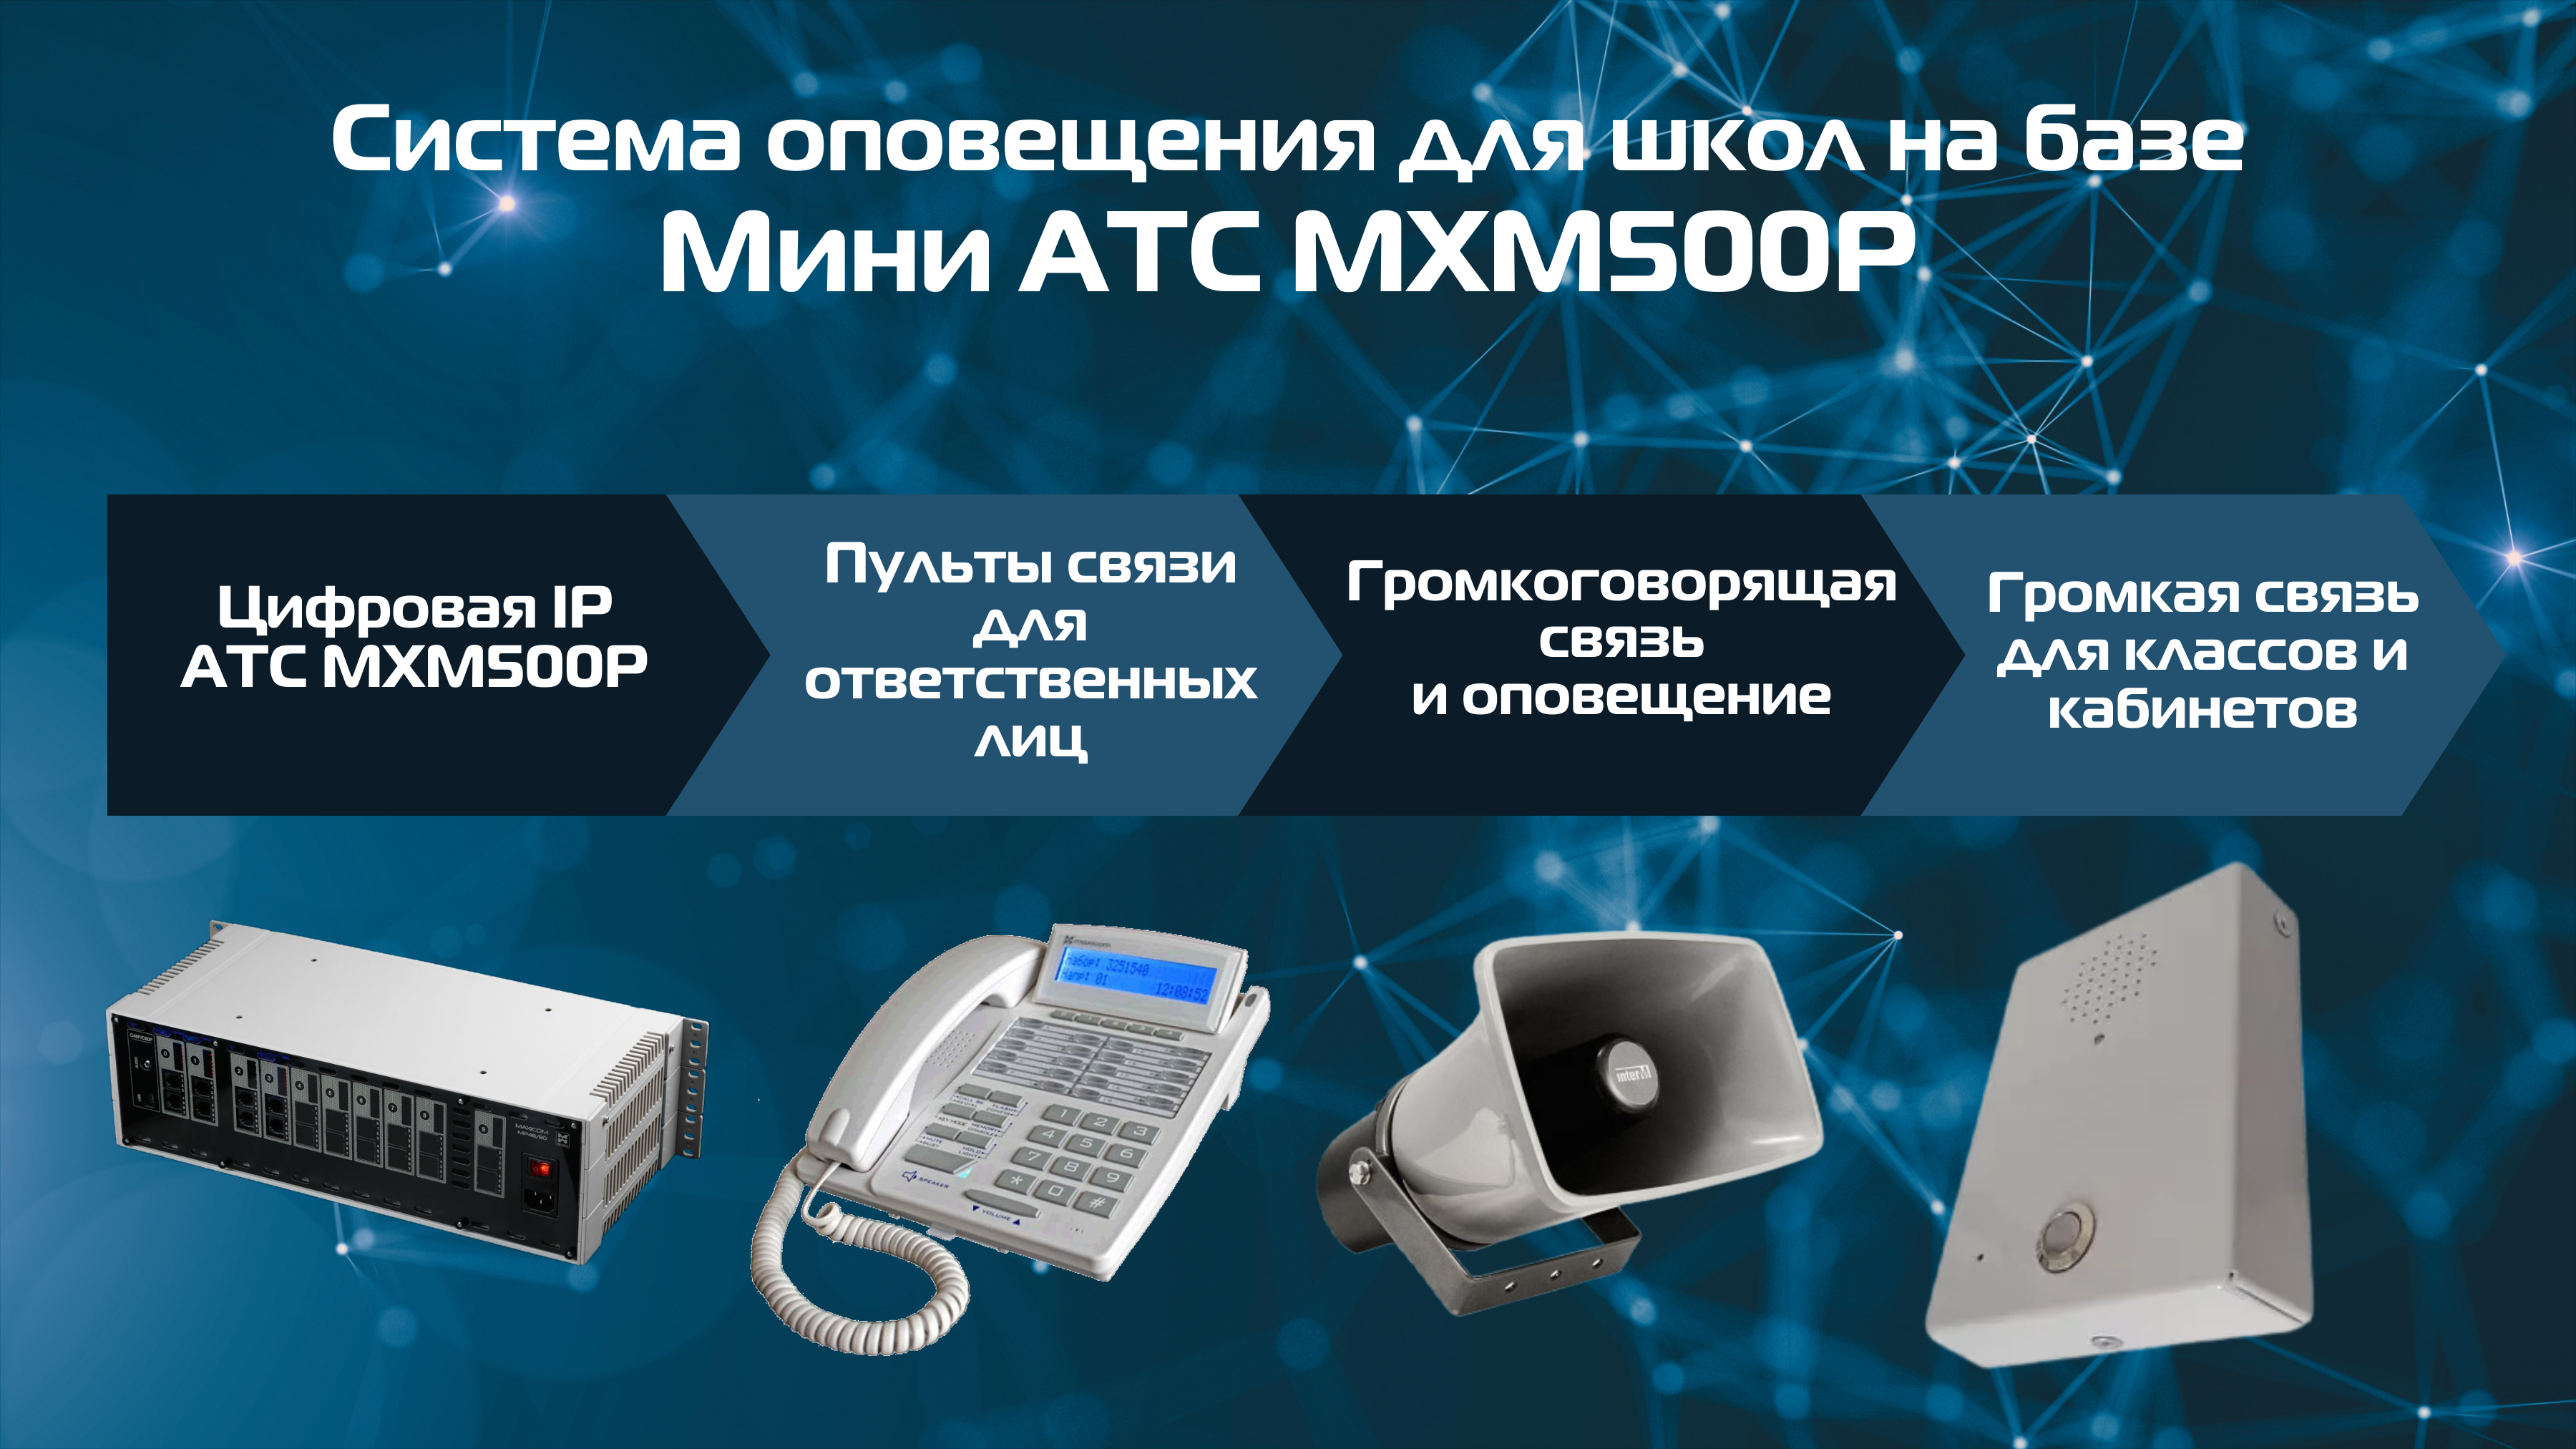 система связи в школе на базе Цифровой IP АТС "Максиком" MXM500P